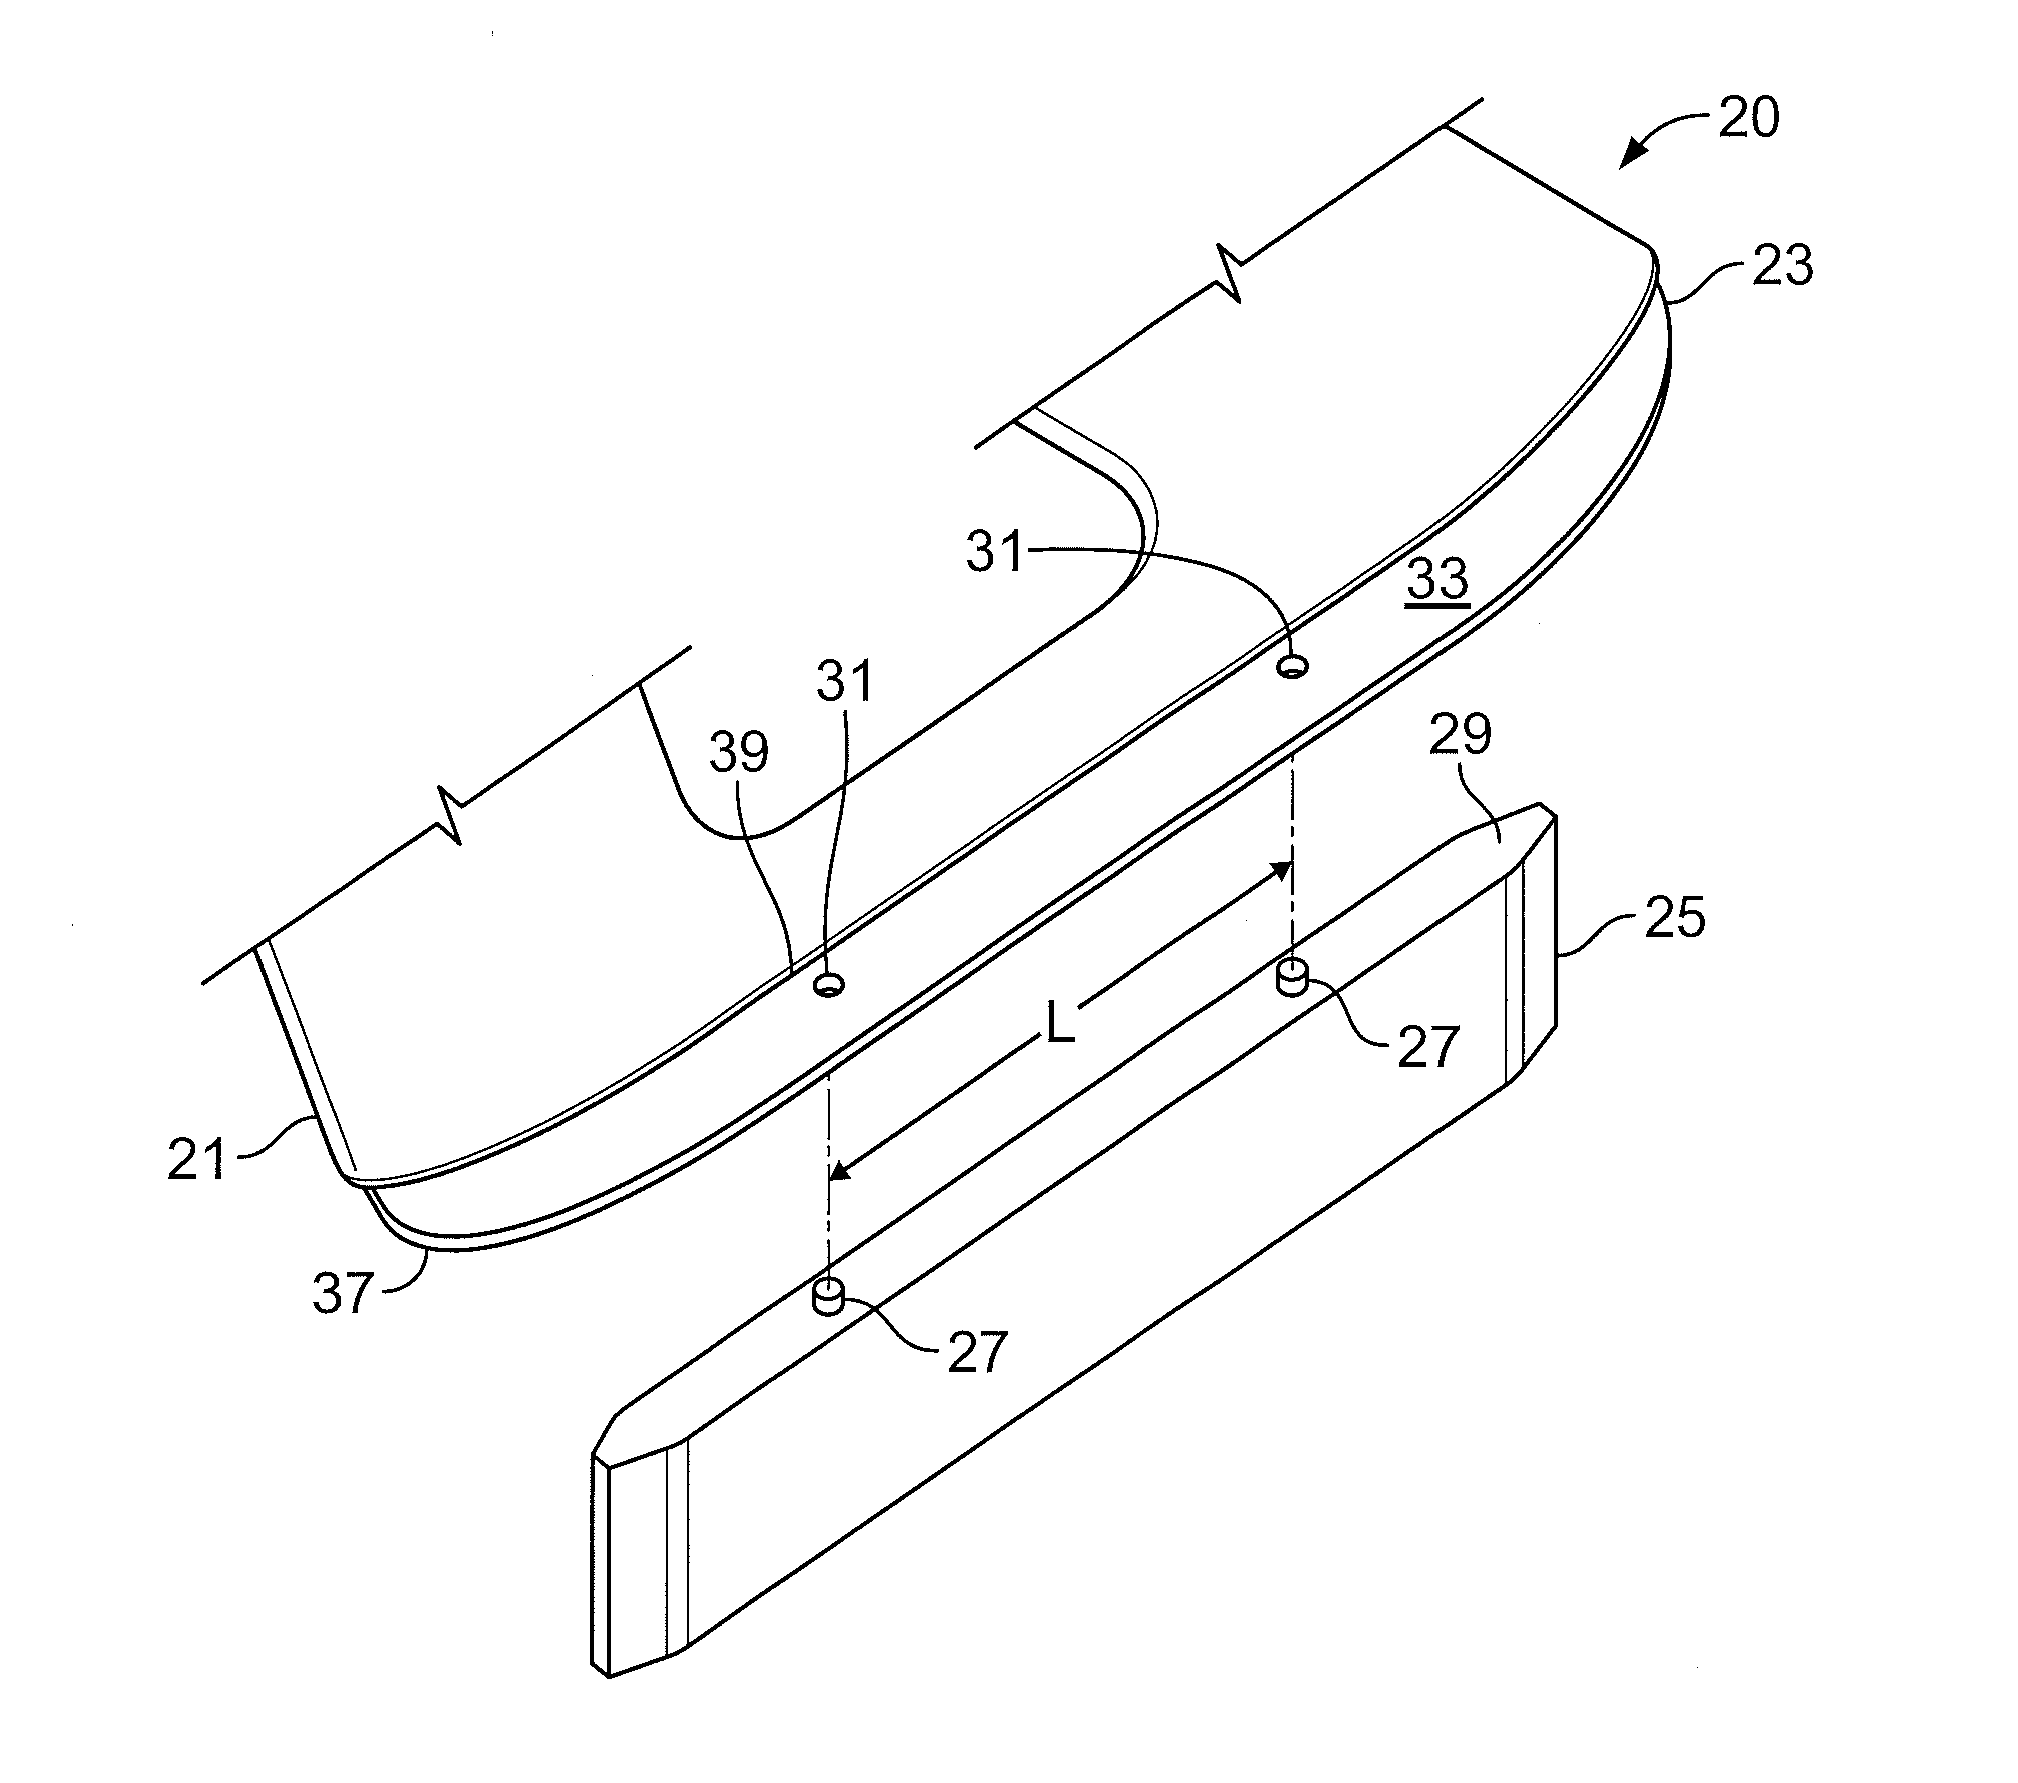 Stake sharpening holder, skate blade, and method of use